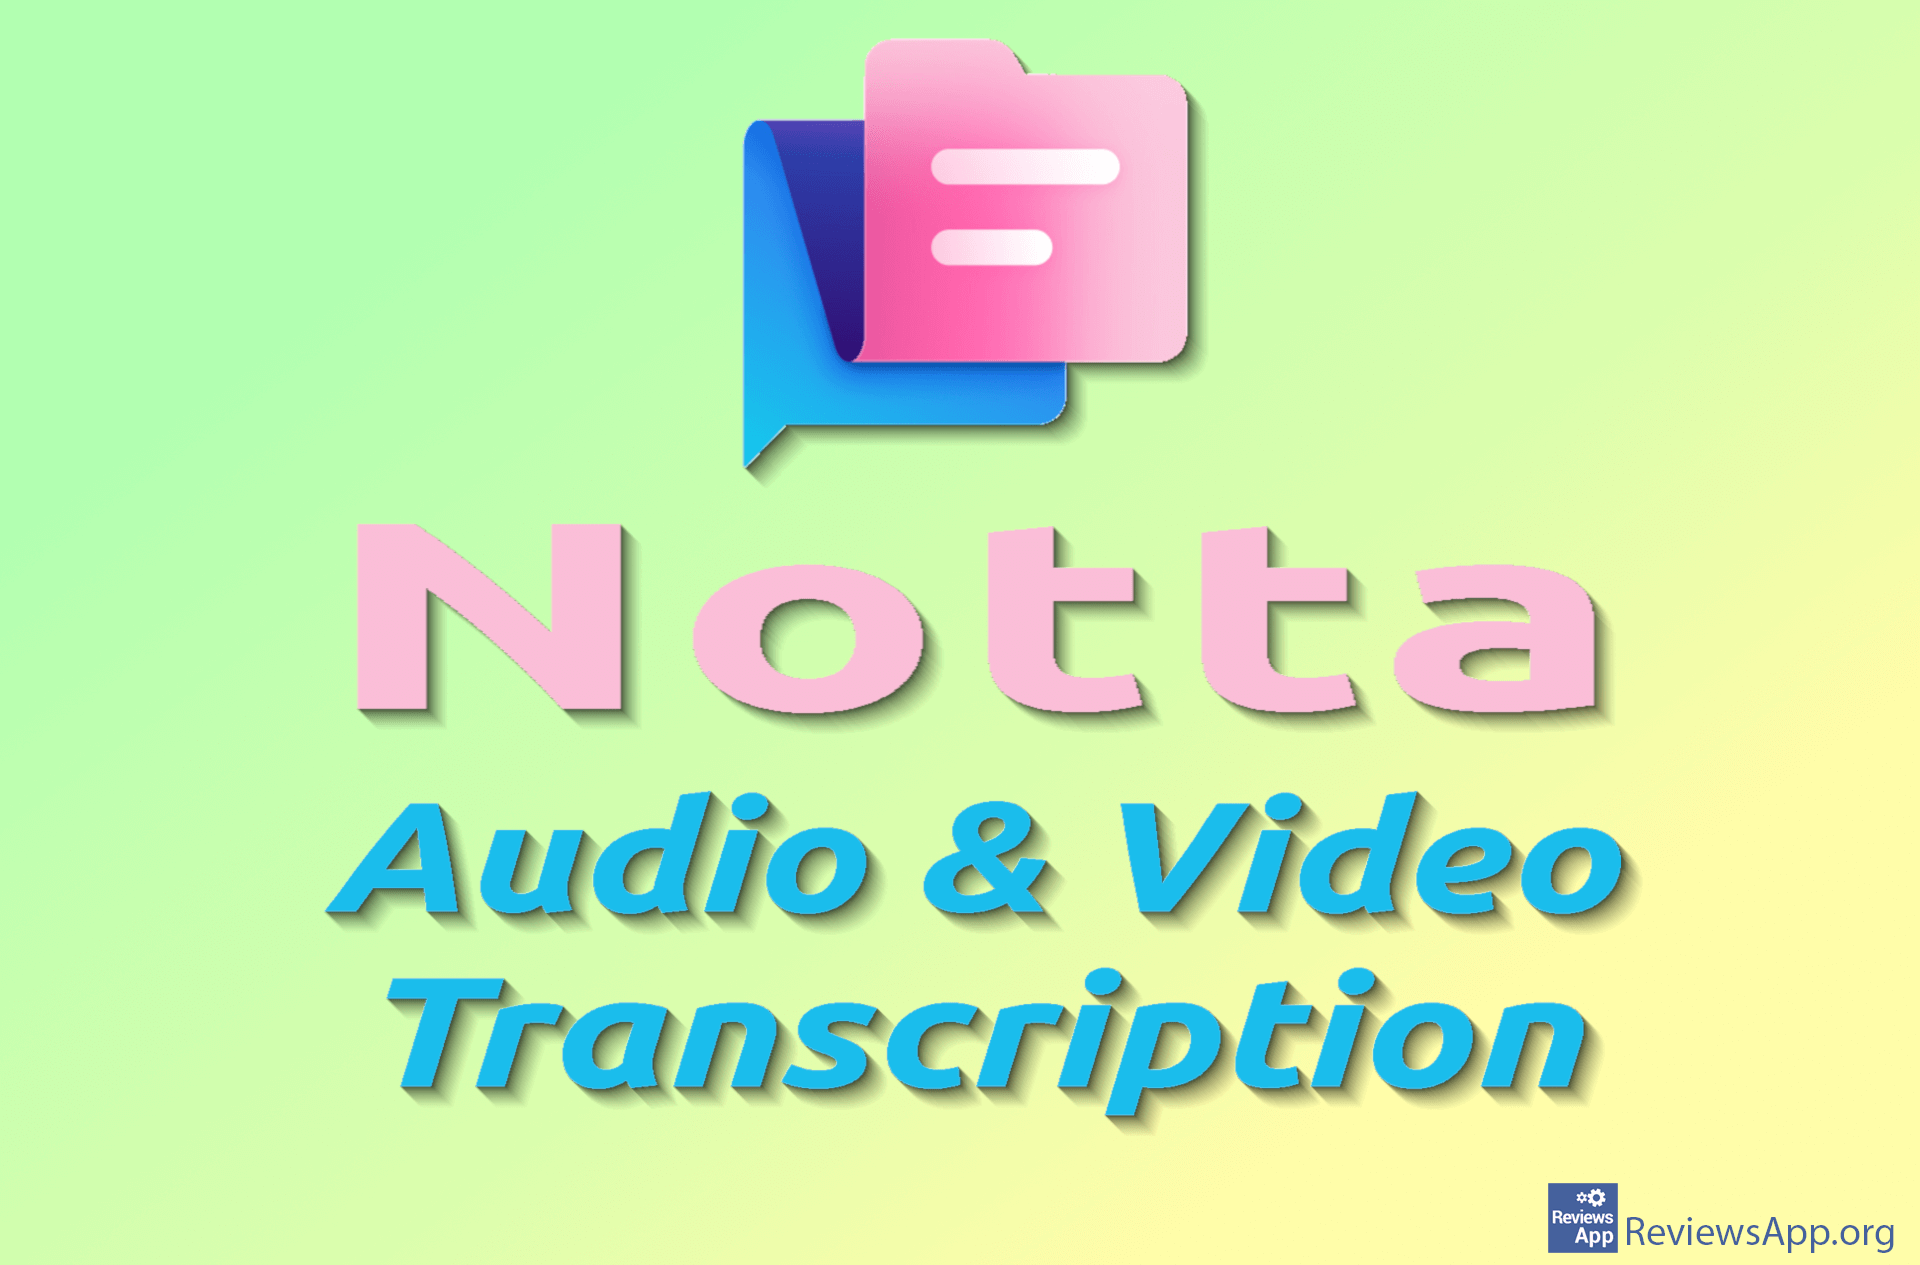 Notta – Audio & Video Transcription